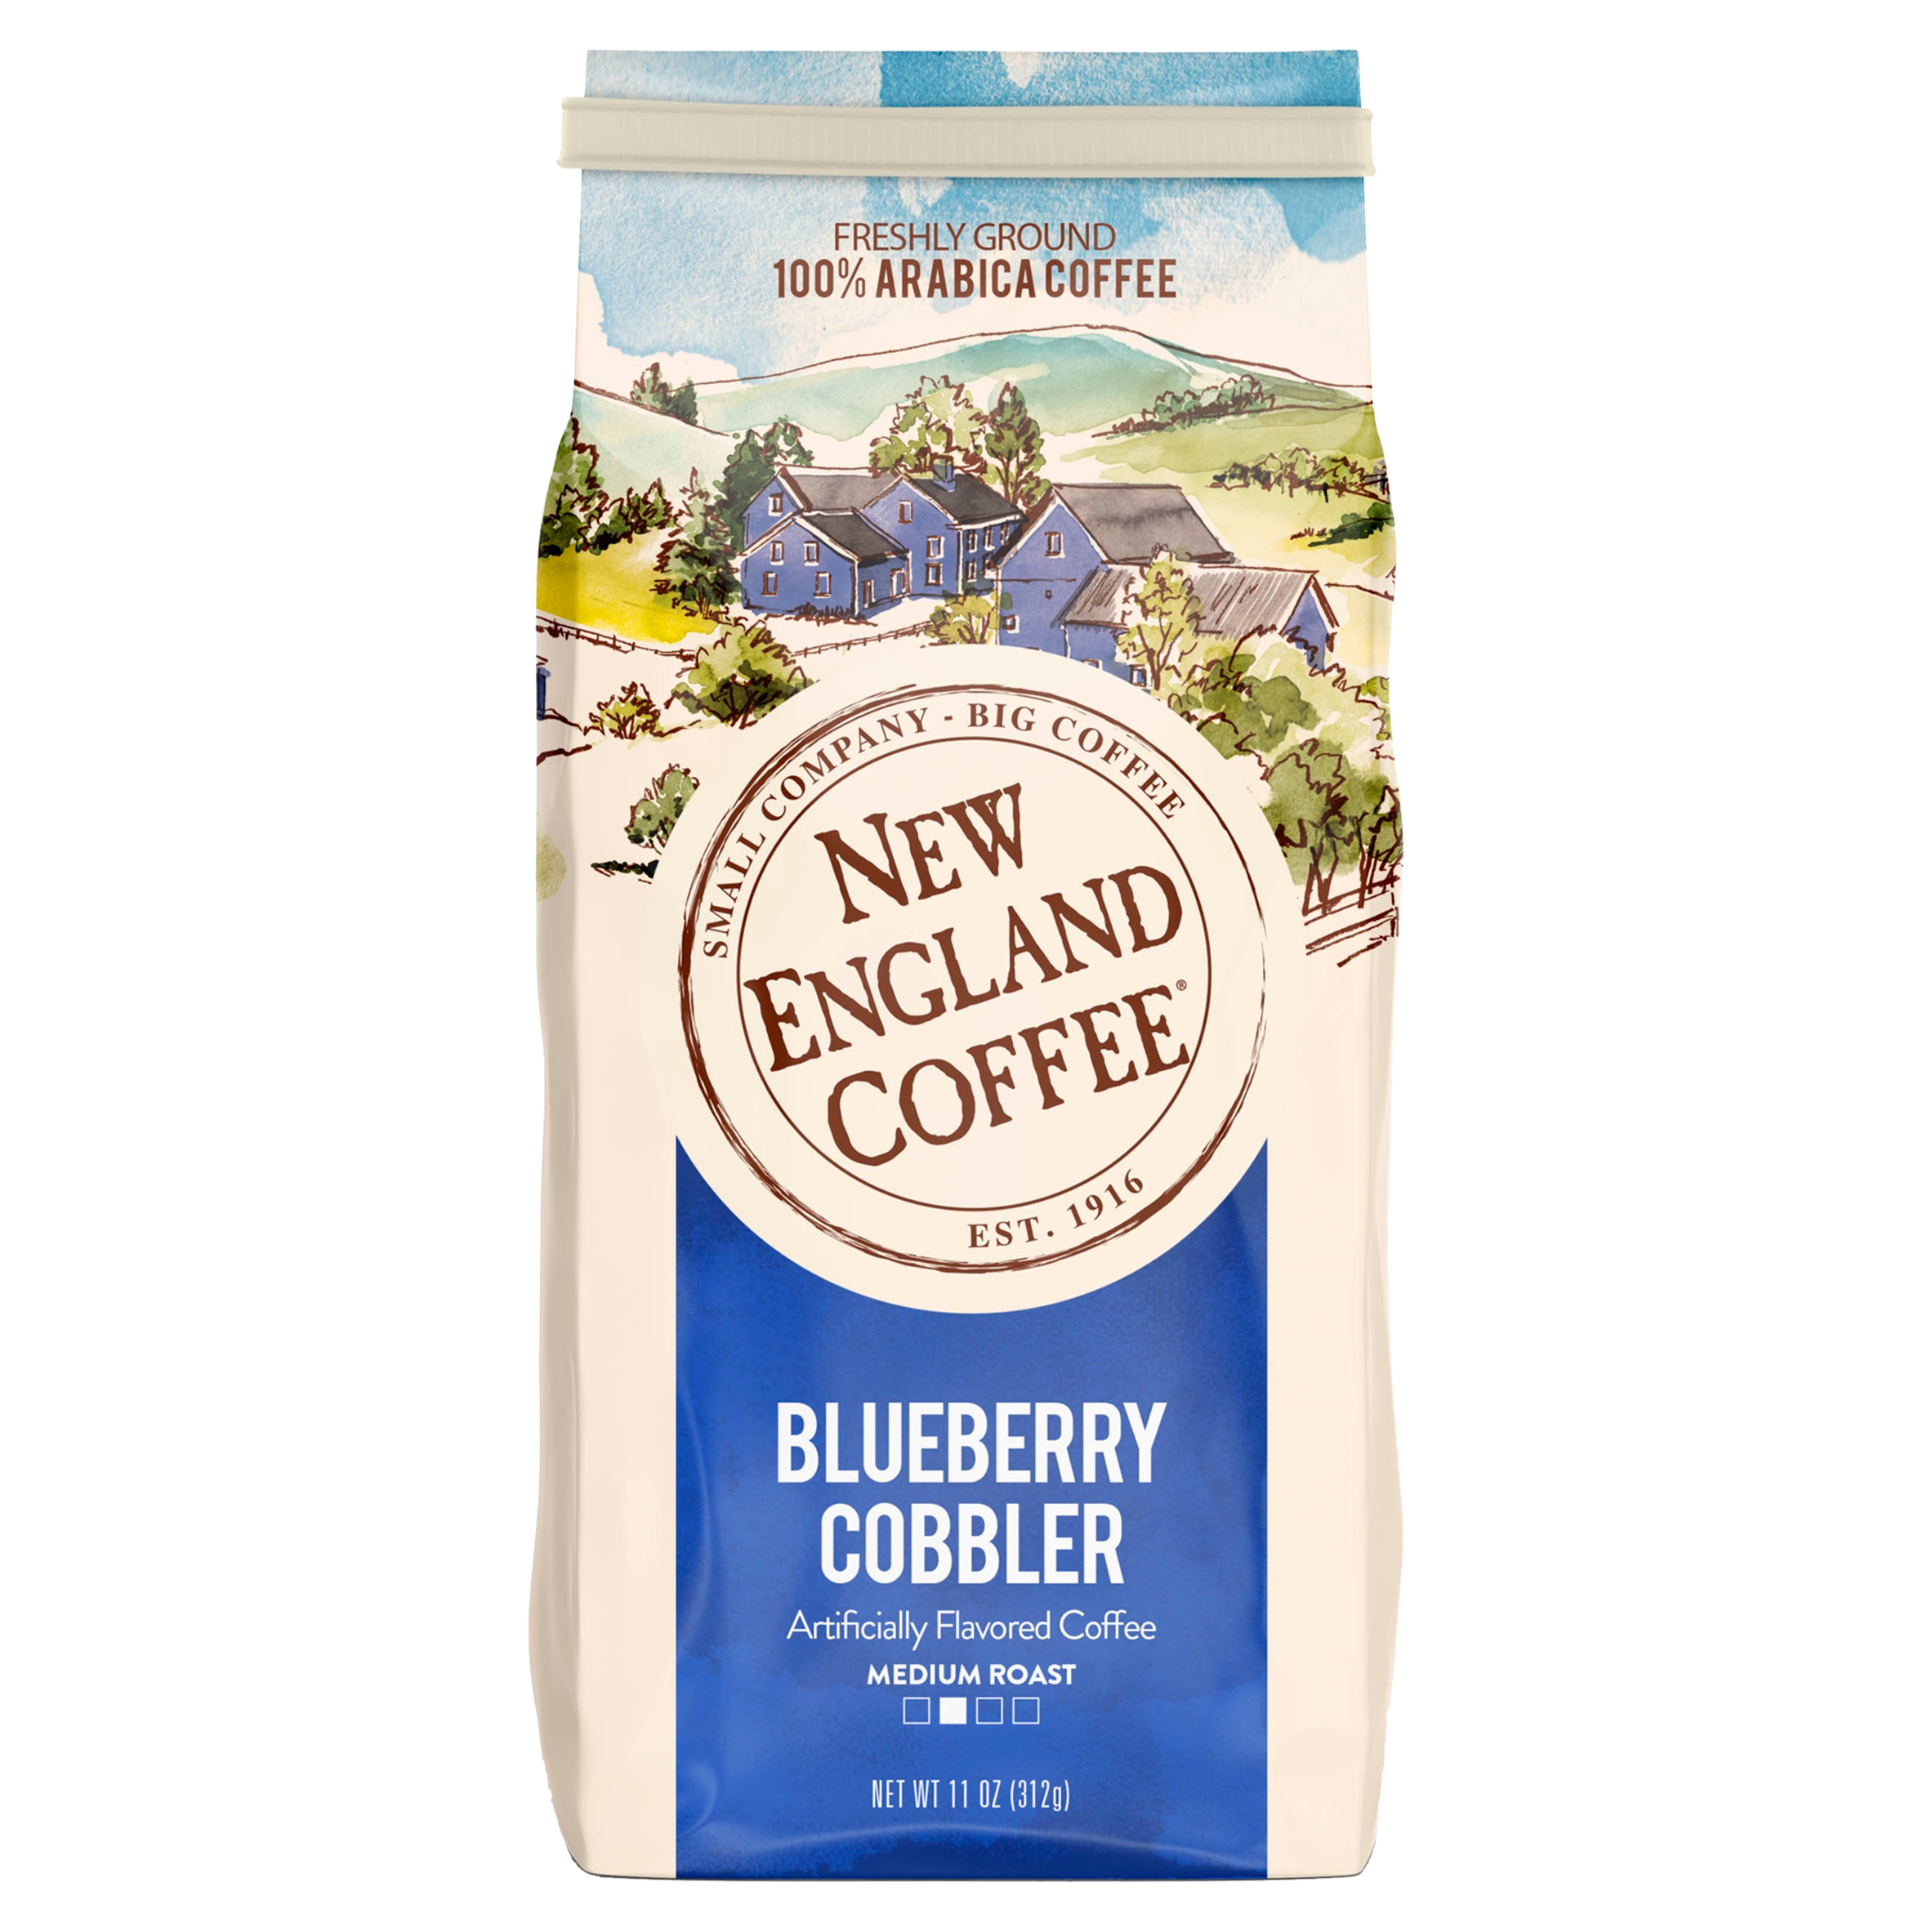 New England Coffee Blueberry Cobbler Medium Roast Ground Coffee, 11 Oz, Bag - image 1 of 8